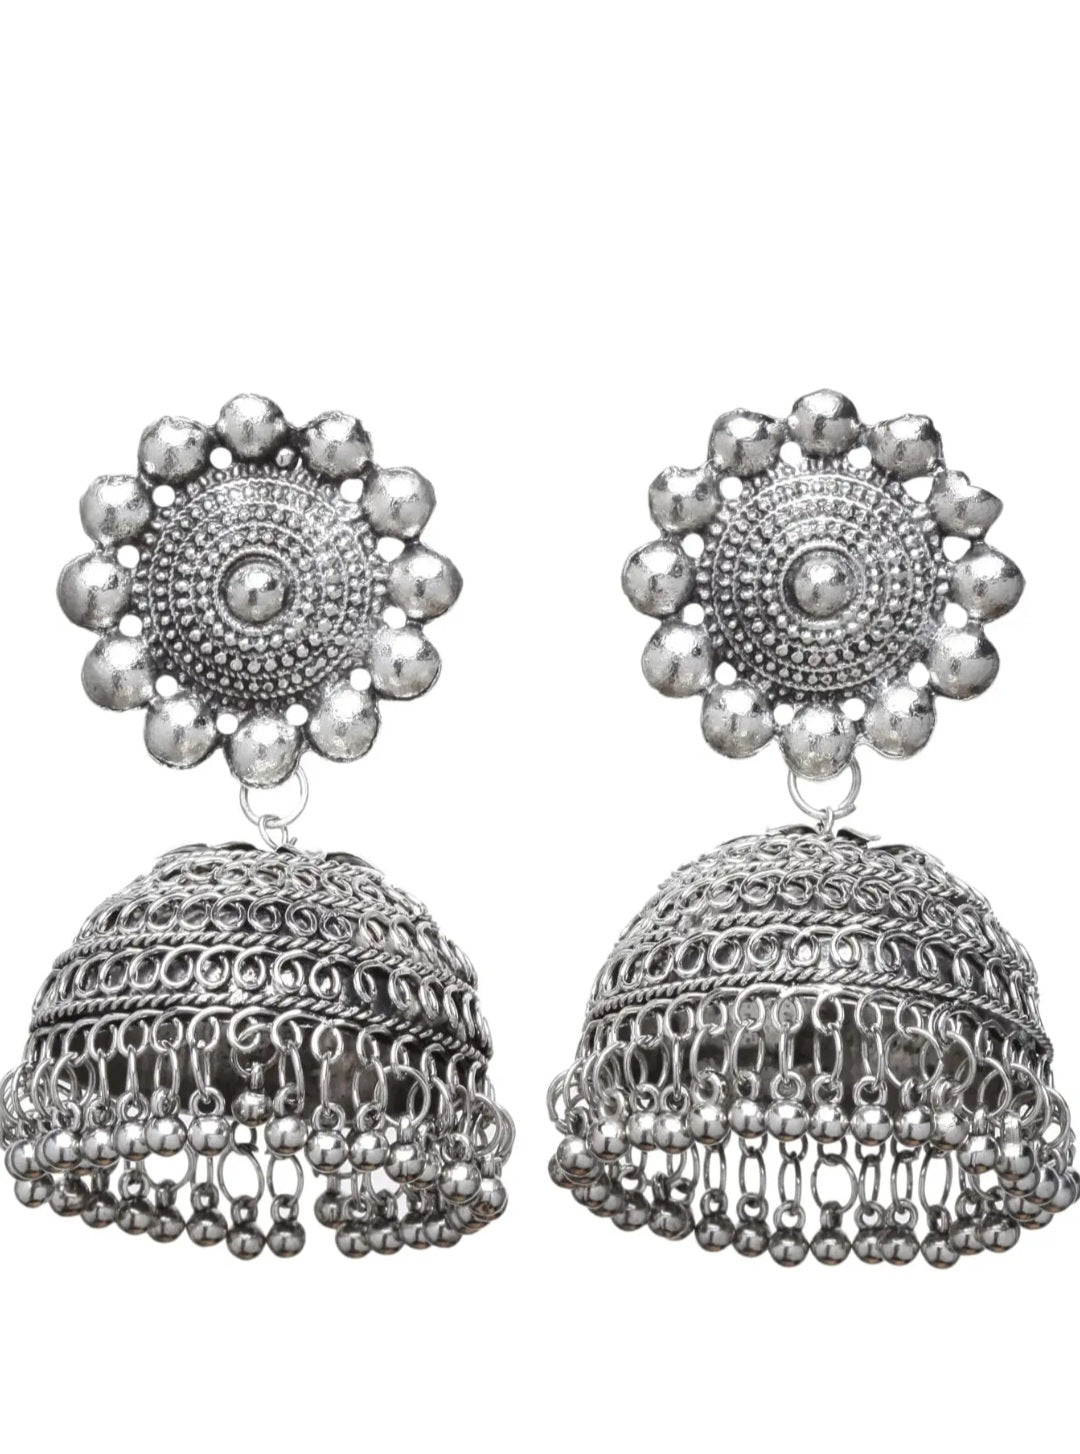 Silver Oxidized Jhumkas Jhumka Jhumki Celebrity Choice Traditional Earrings for Women